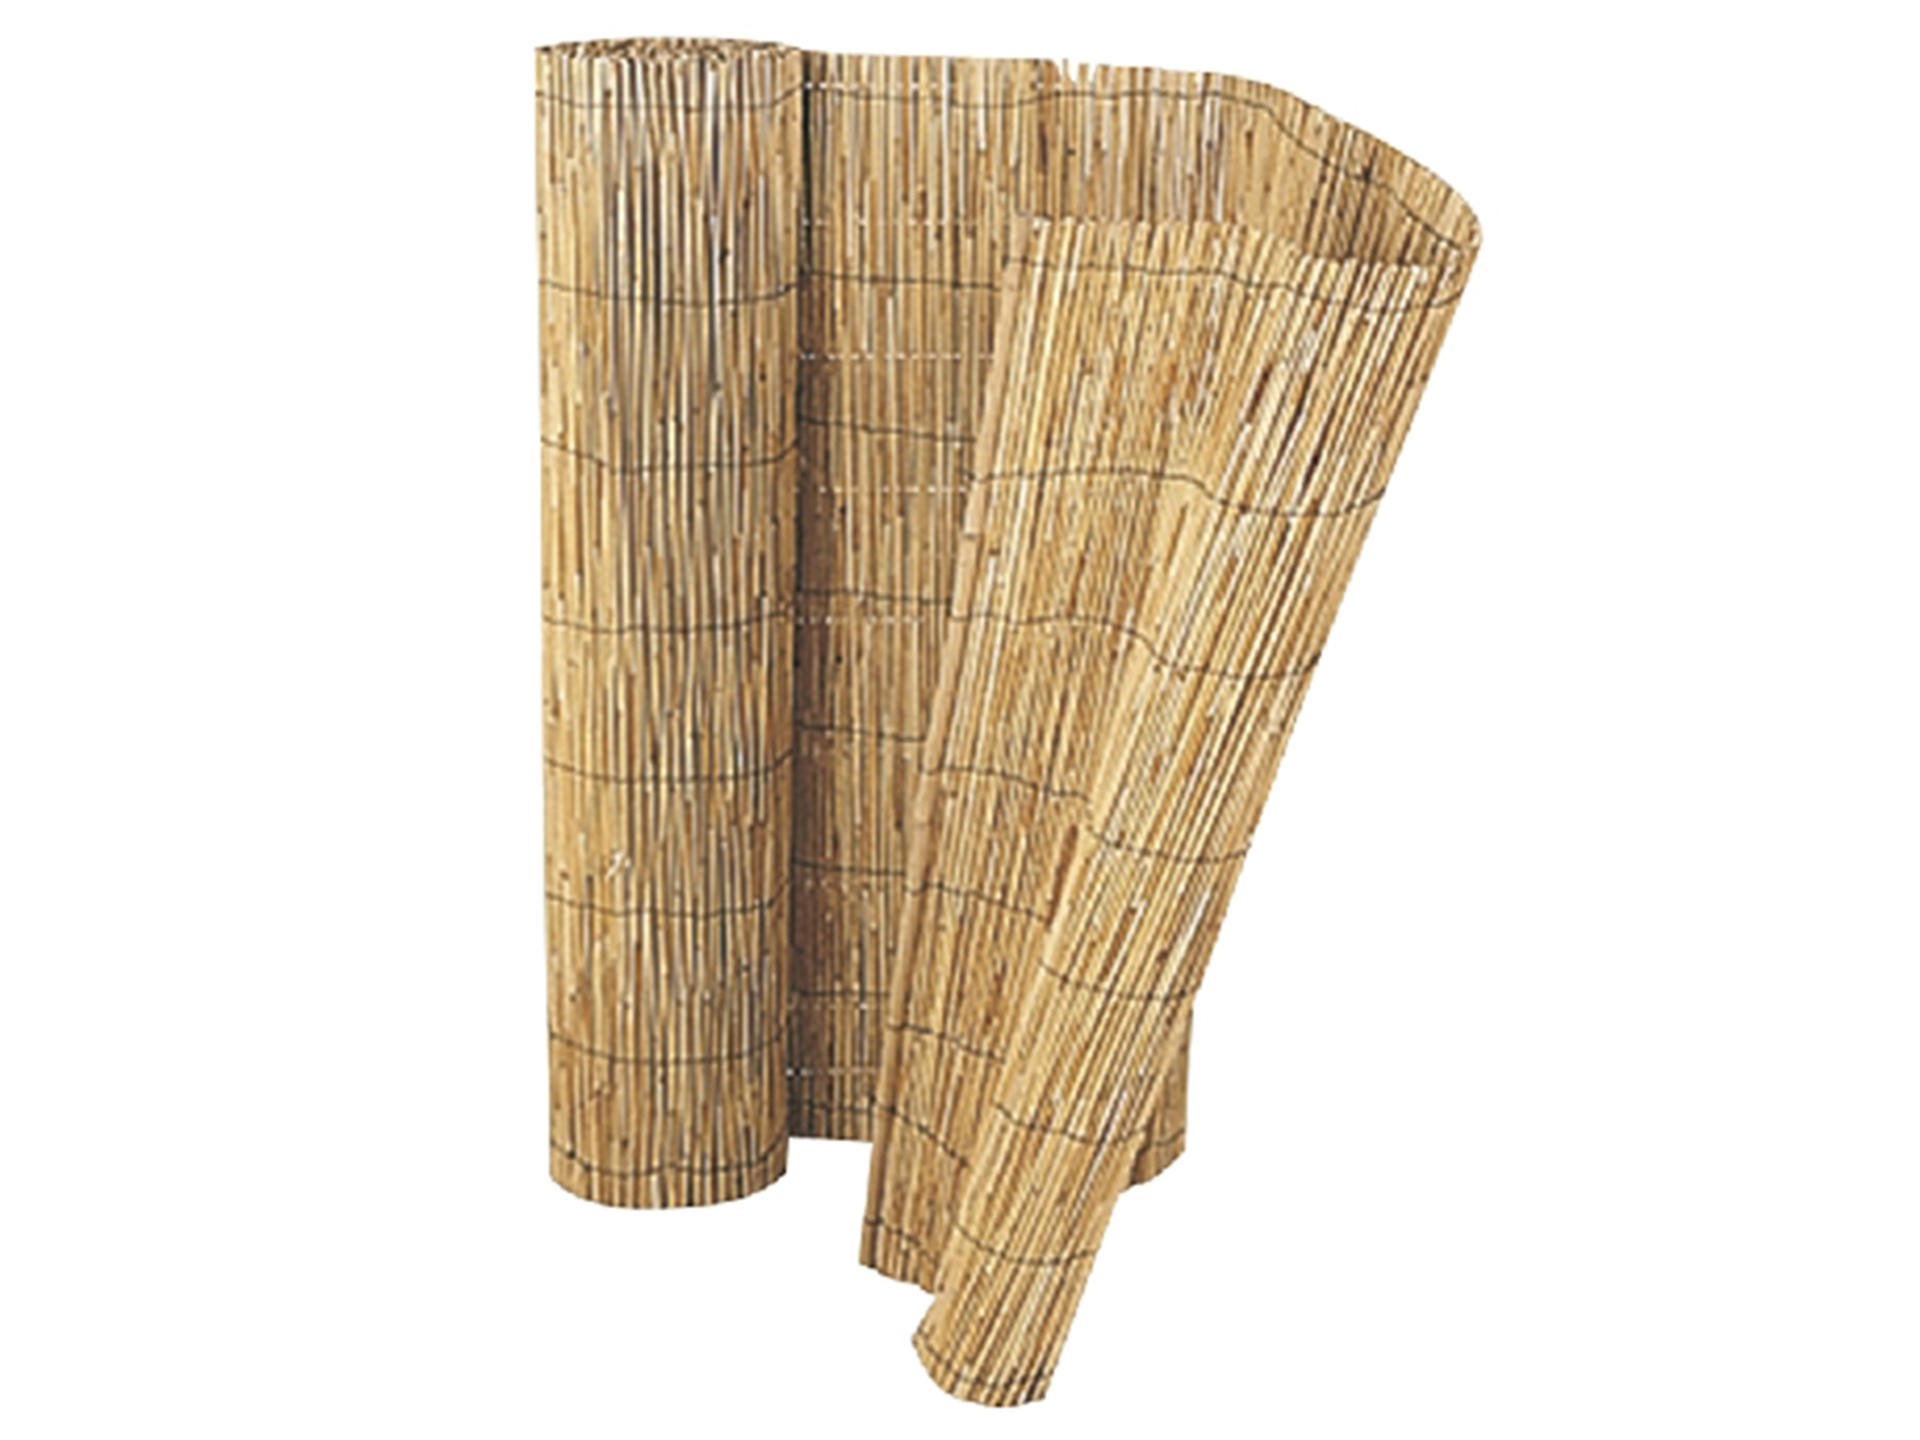 Brise Vue Bambou - 150cm (H) x 250cm (L) - Canisse 100% Bambou Naturel